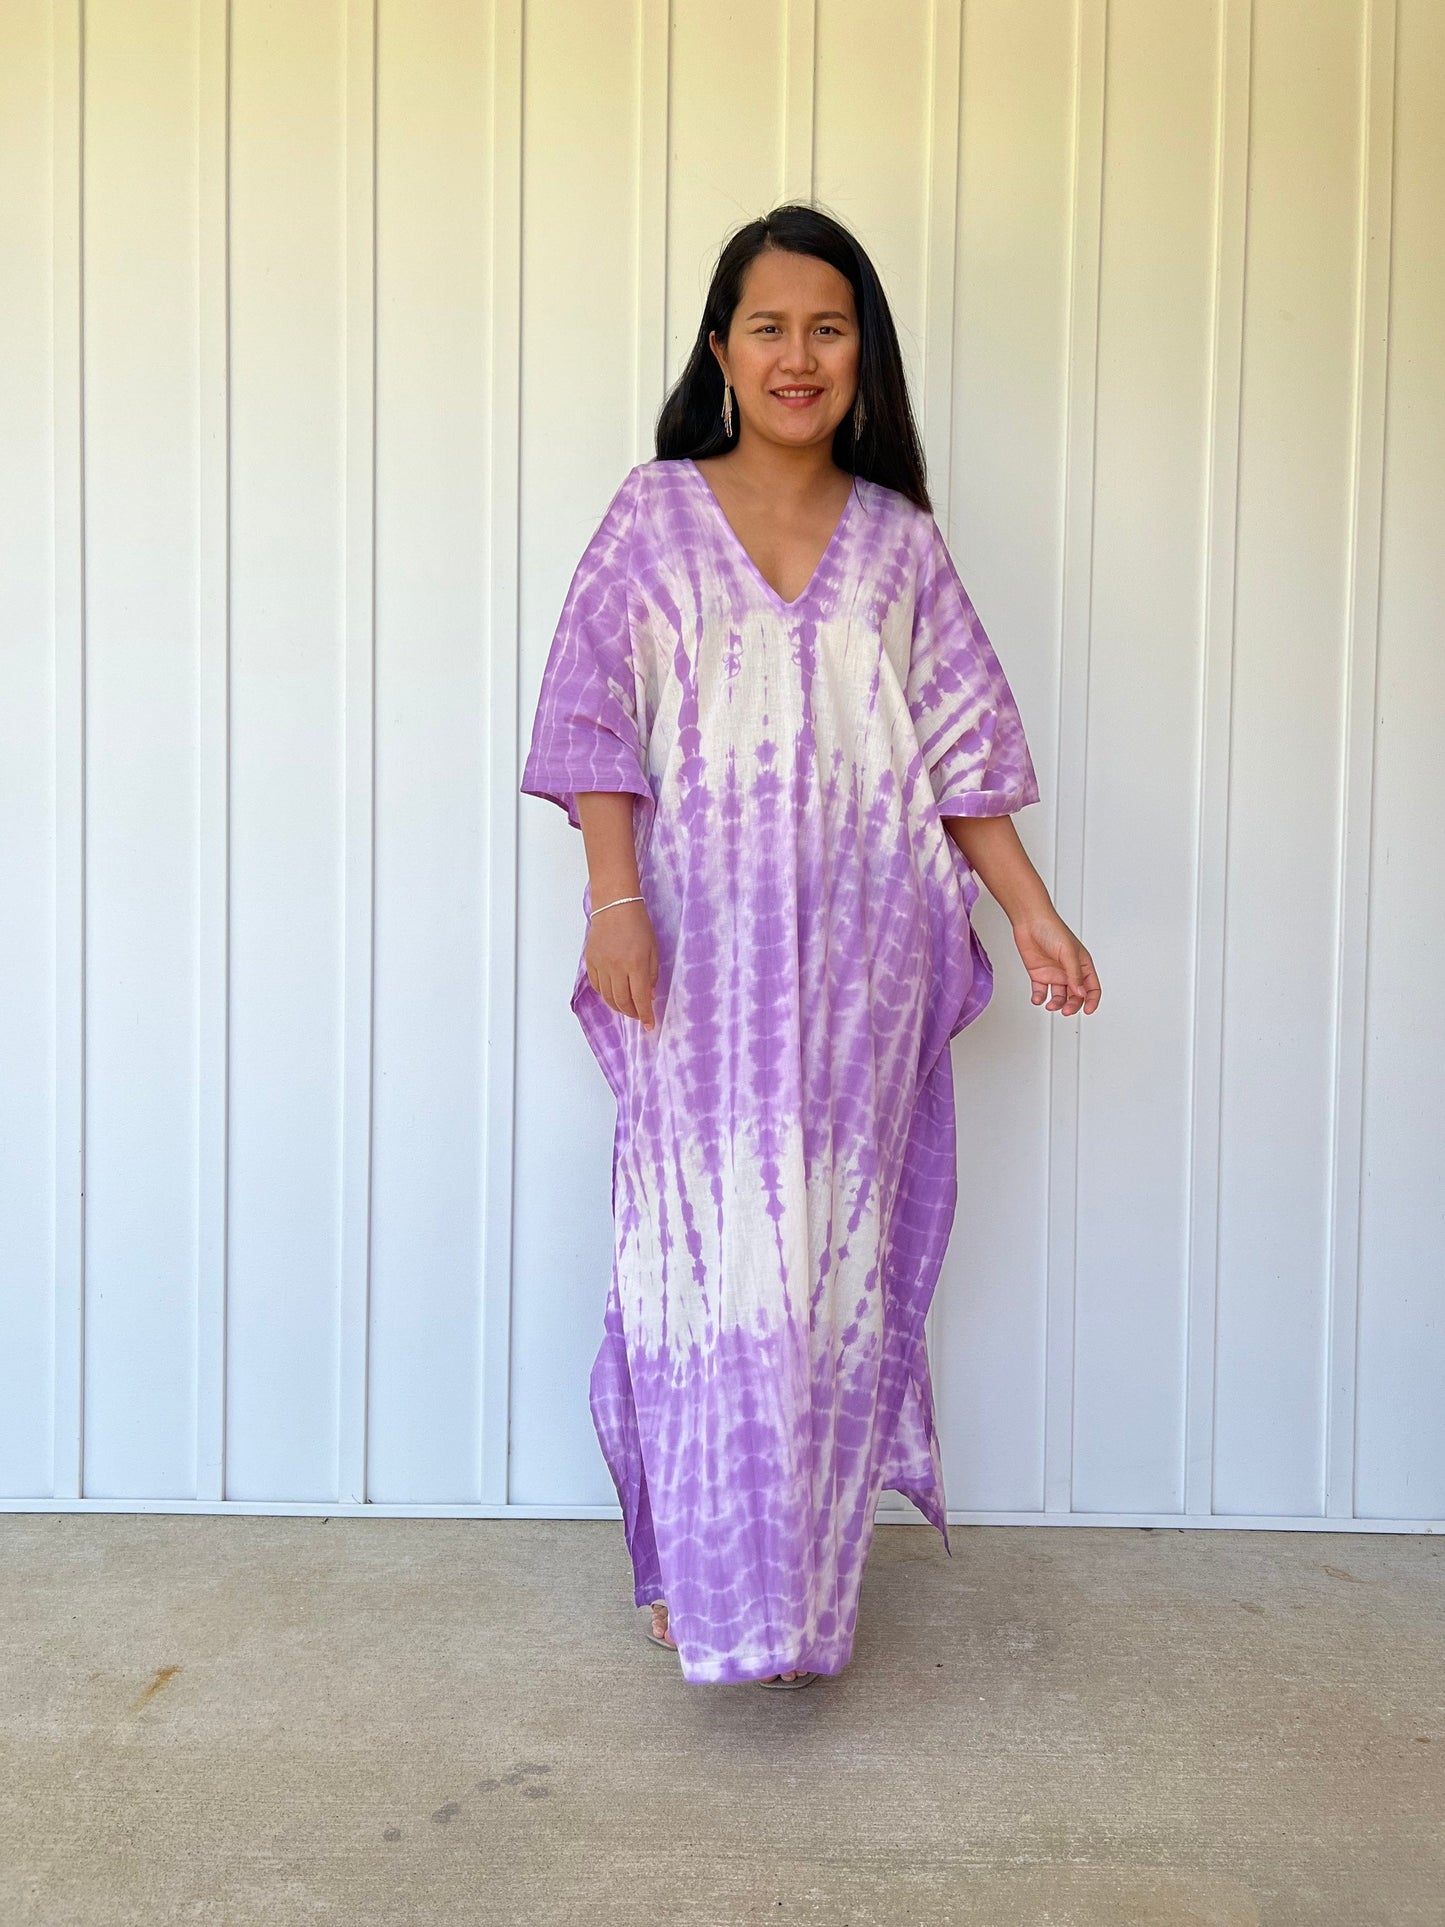 MALA handworks  Olena semi sheer Kaftan in White and Purple Tie Dye